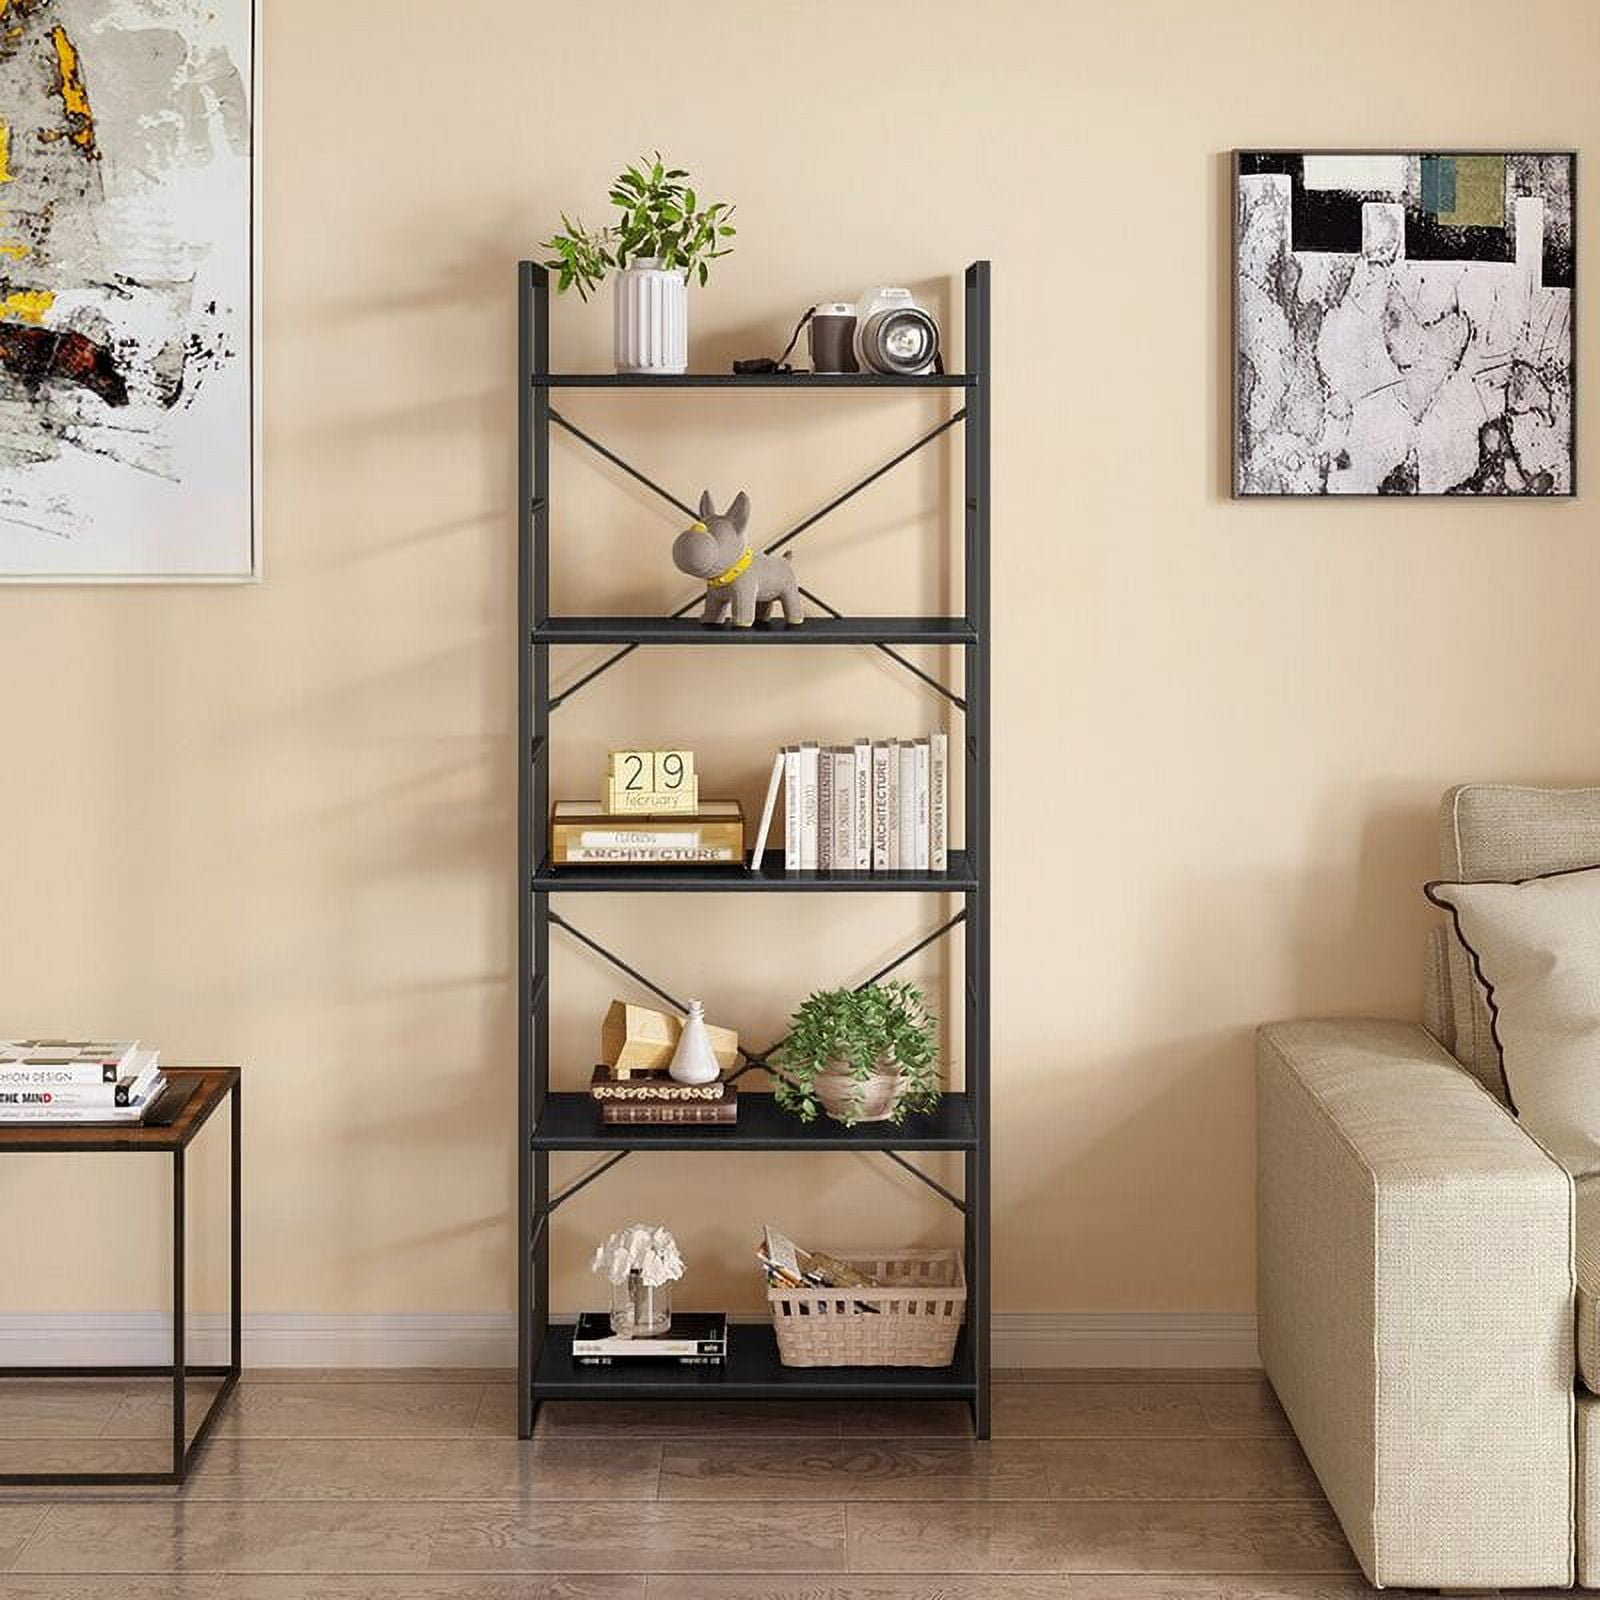 NEW 24x12x63 Inches Tall 5 Tier Bookshelf Display Shelf Organizer